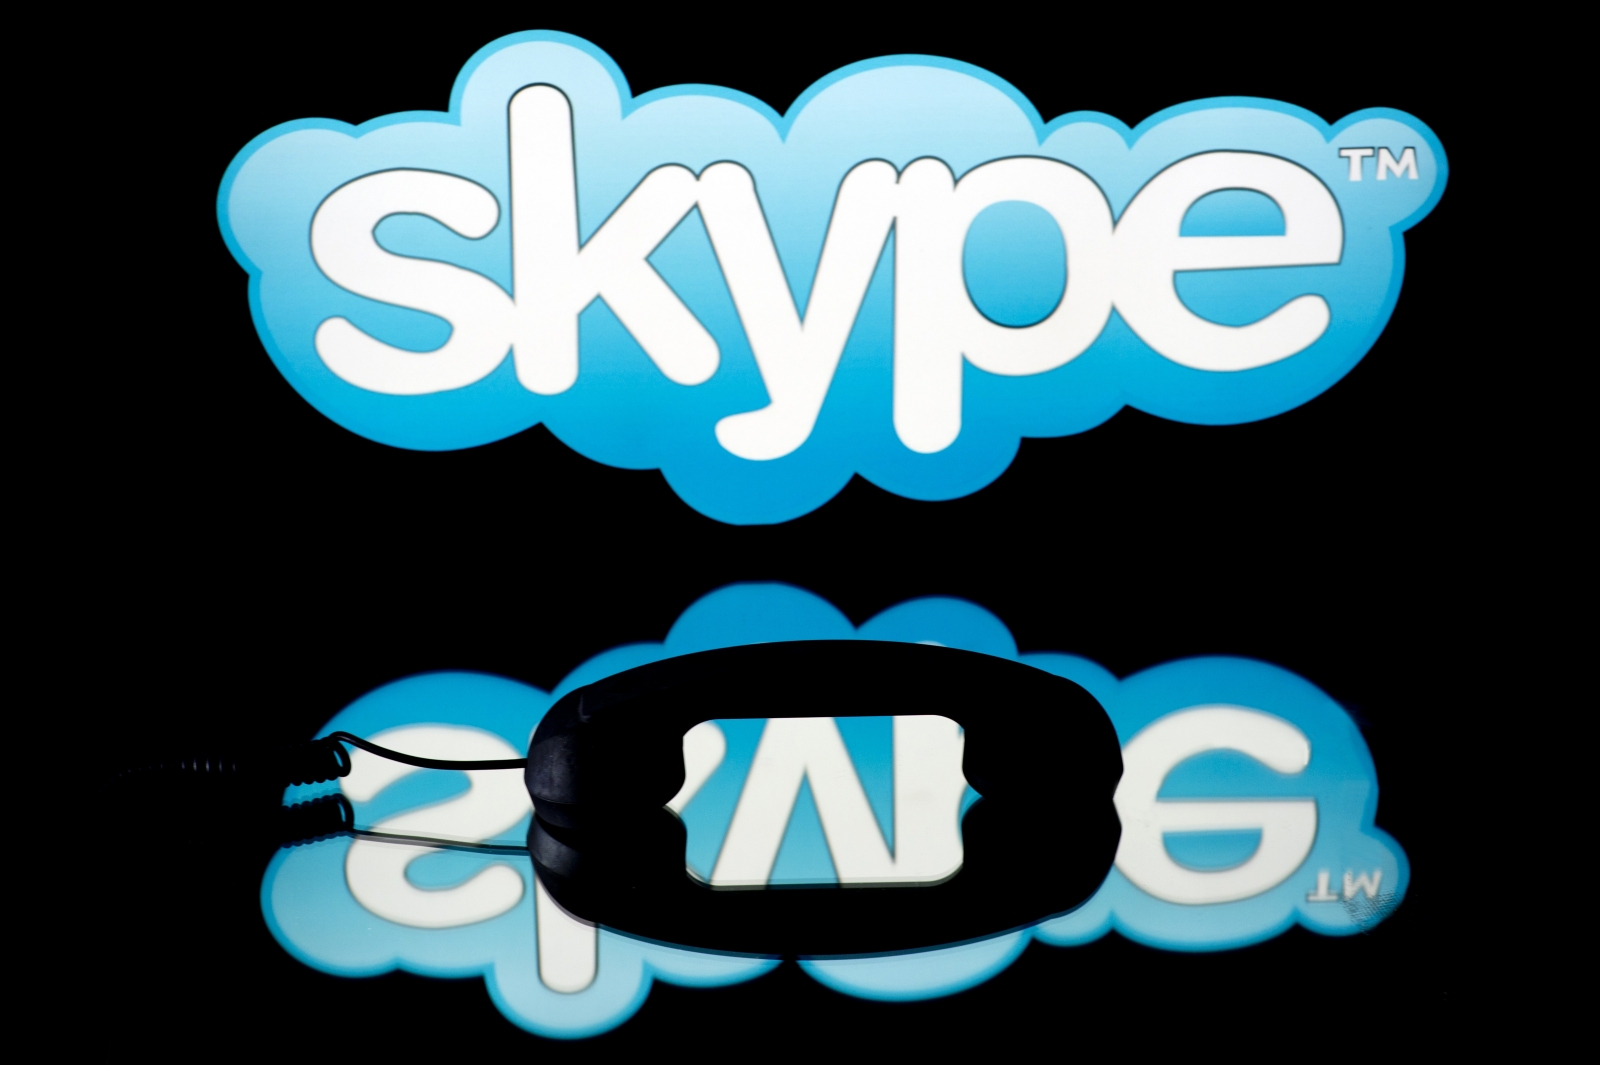 skype a scientist skype tips